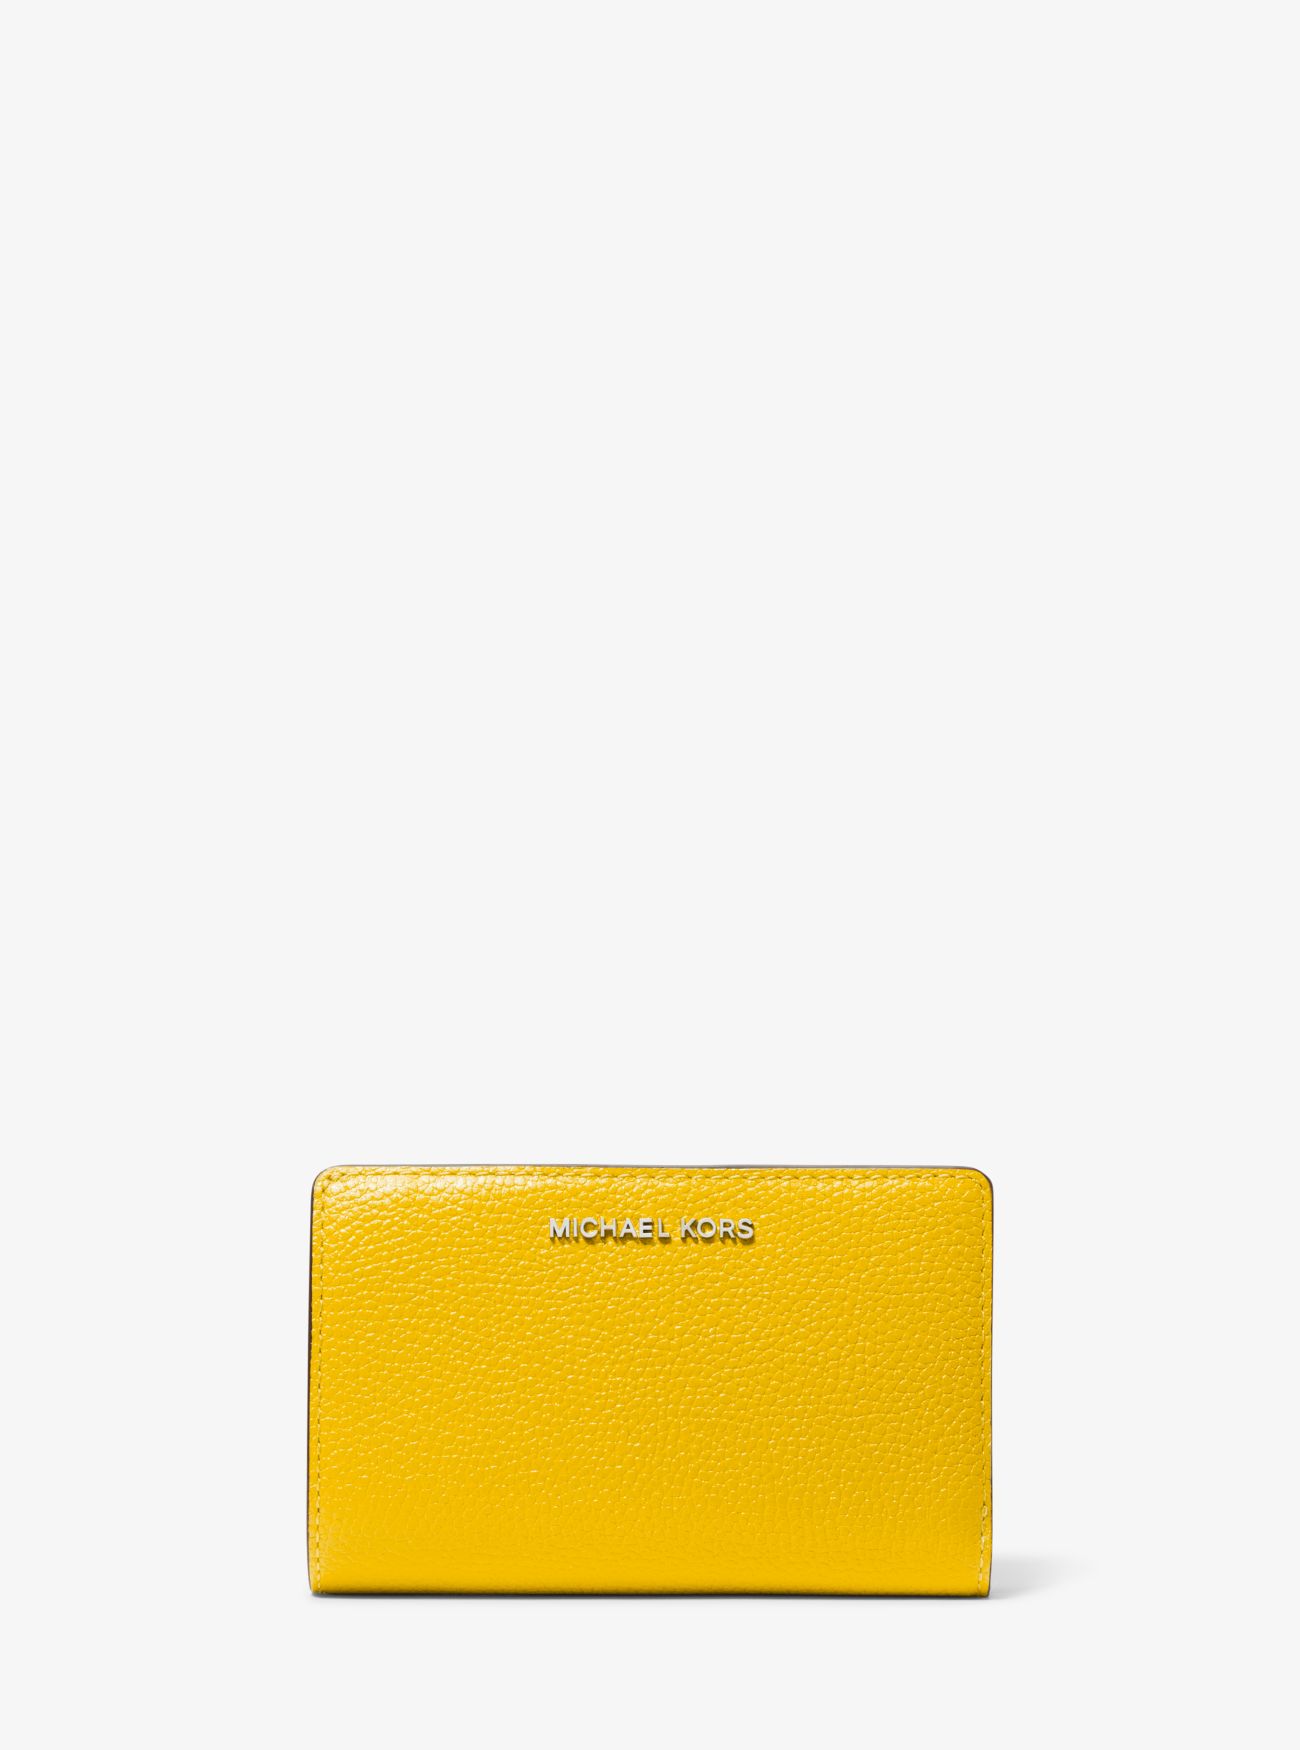 MK Empire Medium Pebbled Leather Wallet - Yellow - Michael Kors